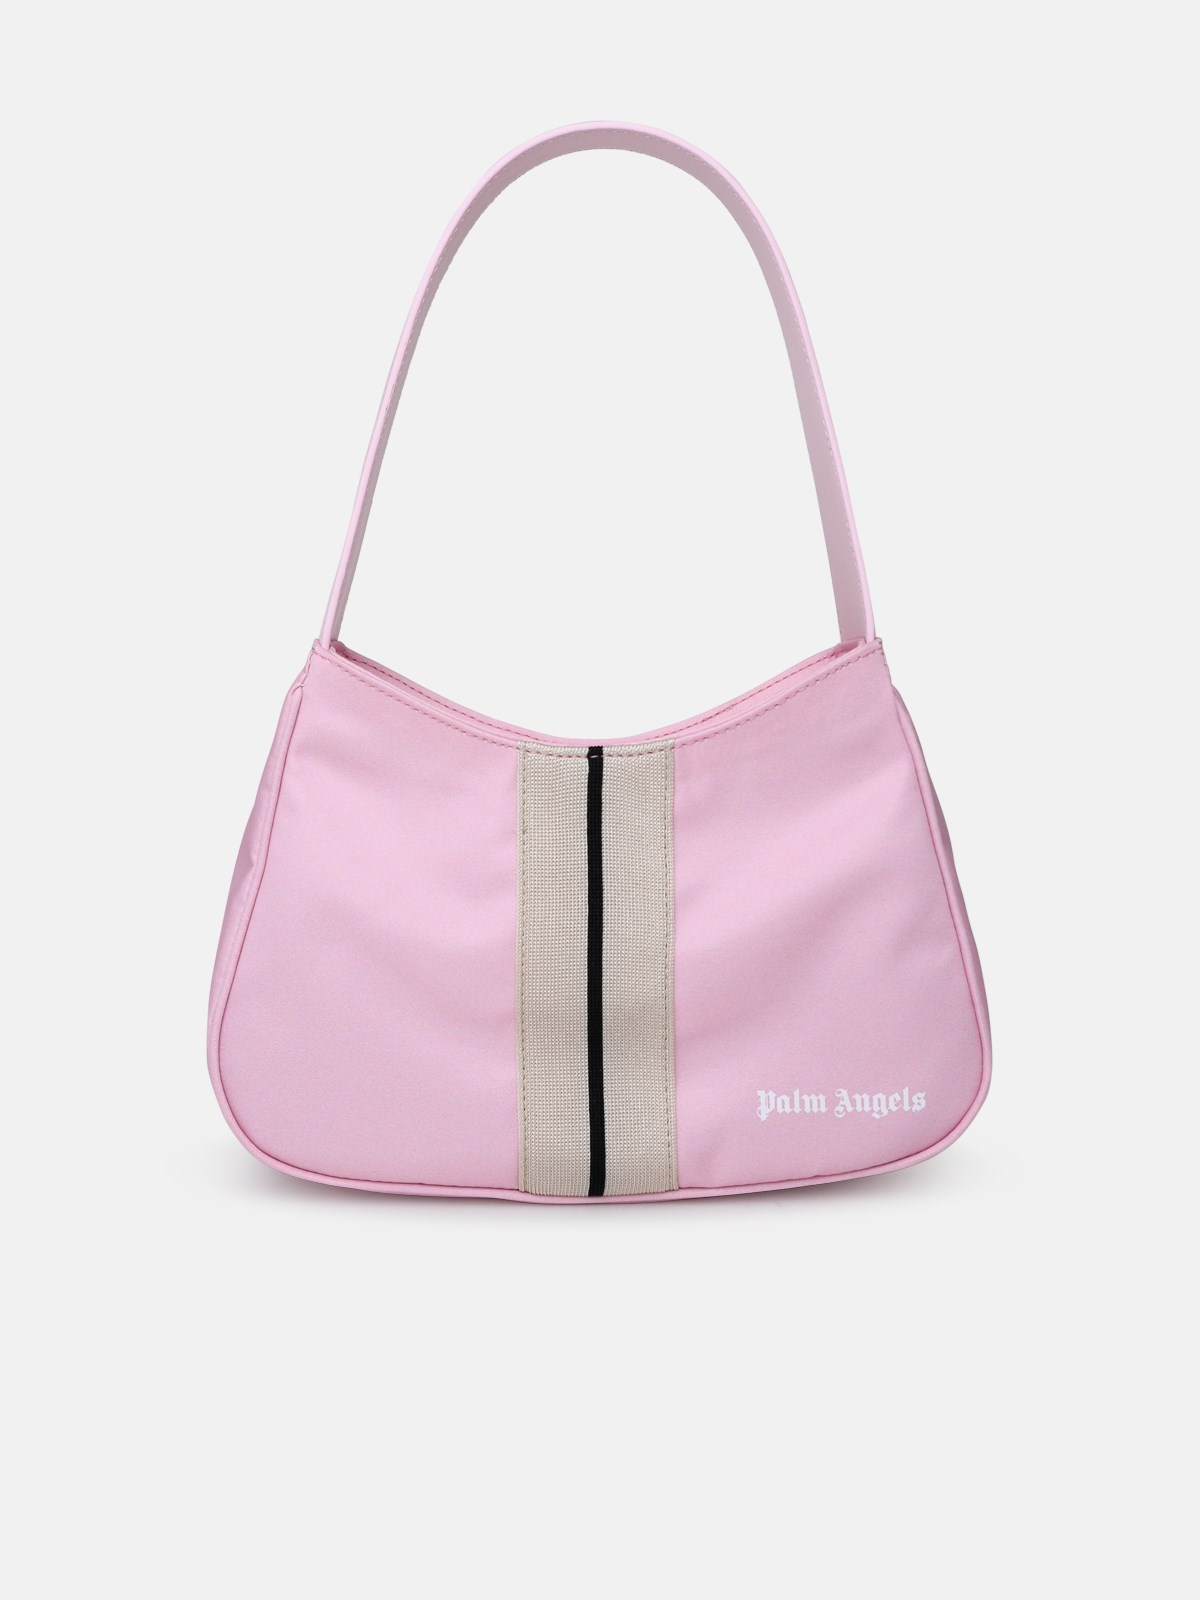 Palm Angels Hobo Venice Pink Nylon Bag